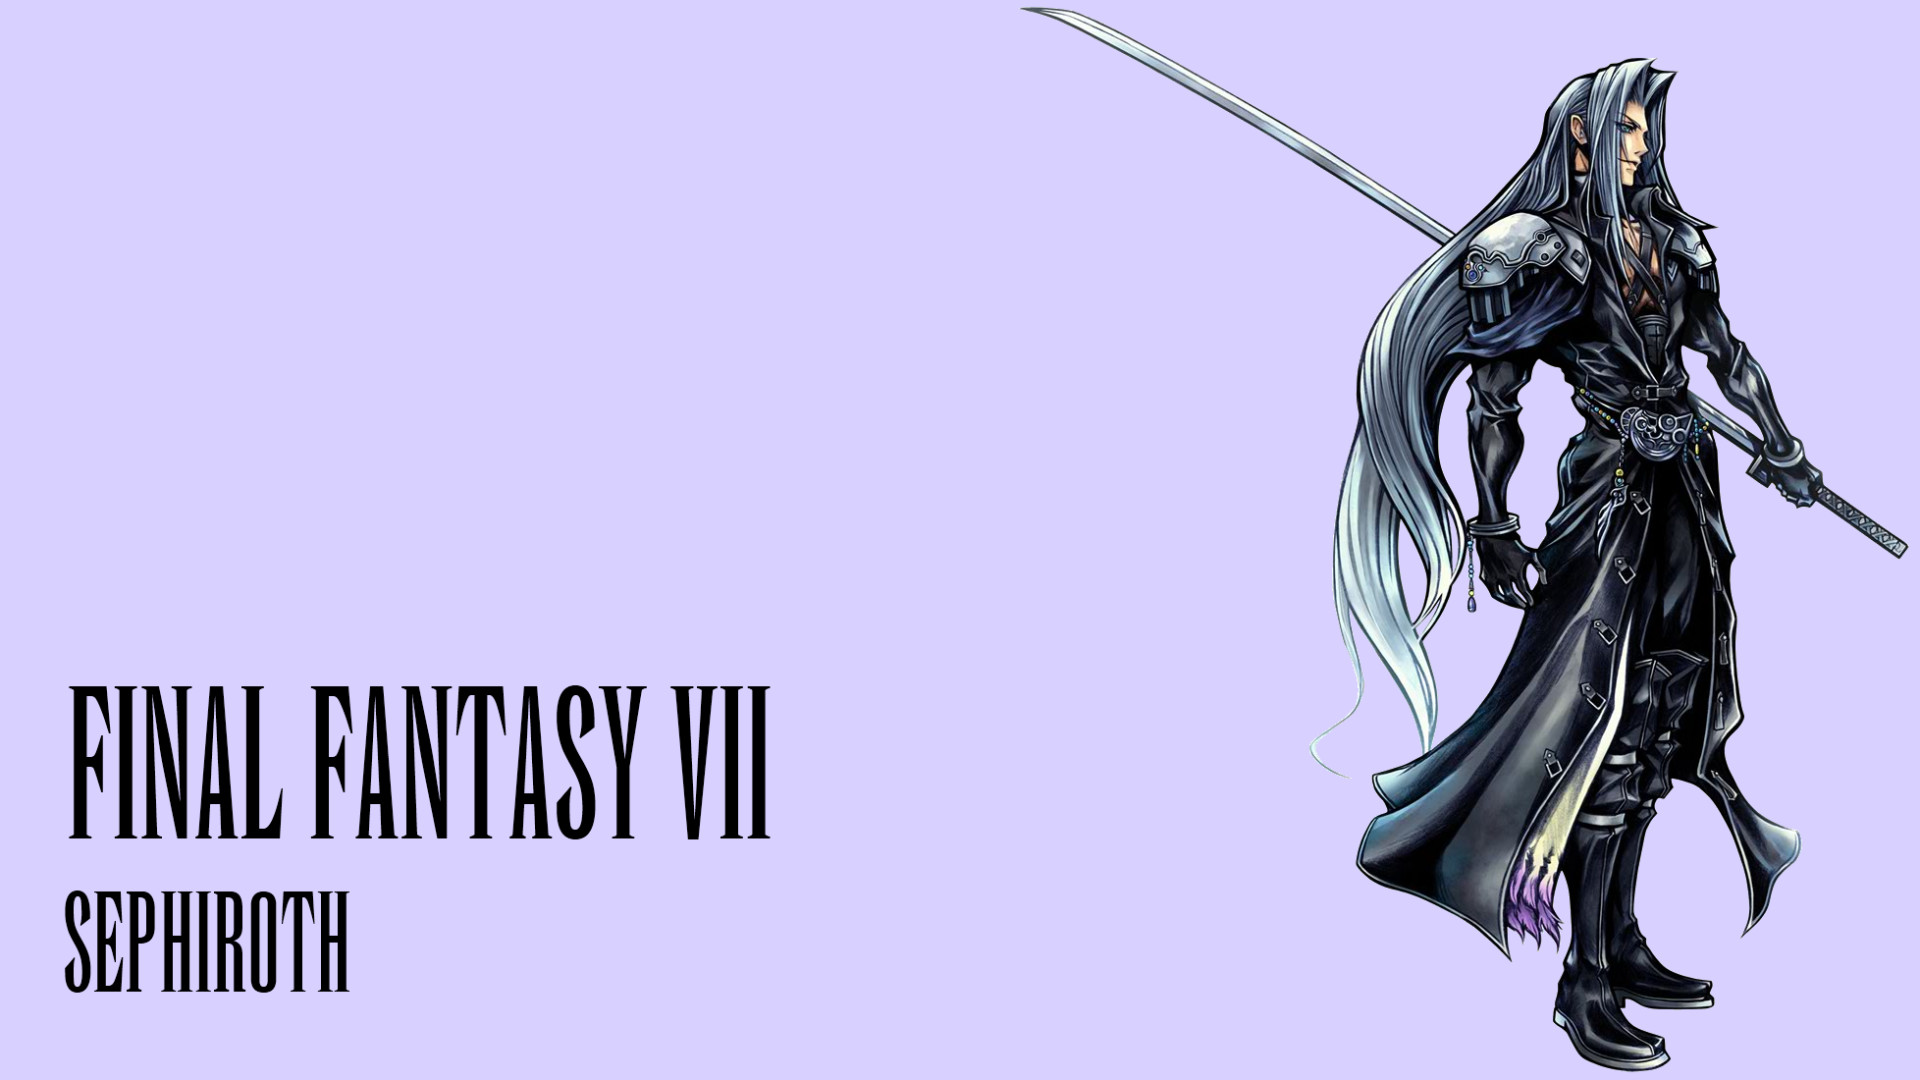 1920x1080 Final Fantasy VII Background Â· Final Fantasy VII Cover Wallpaper